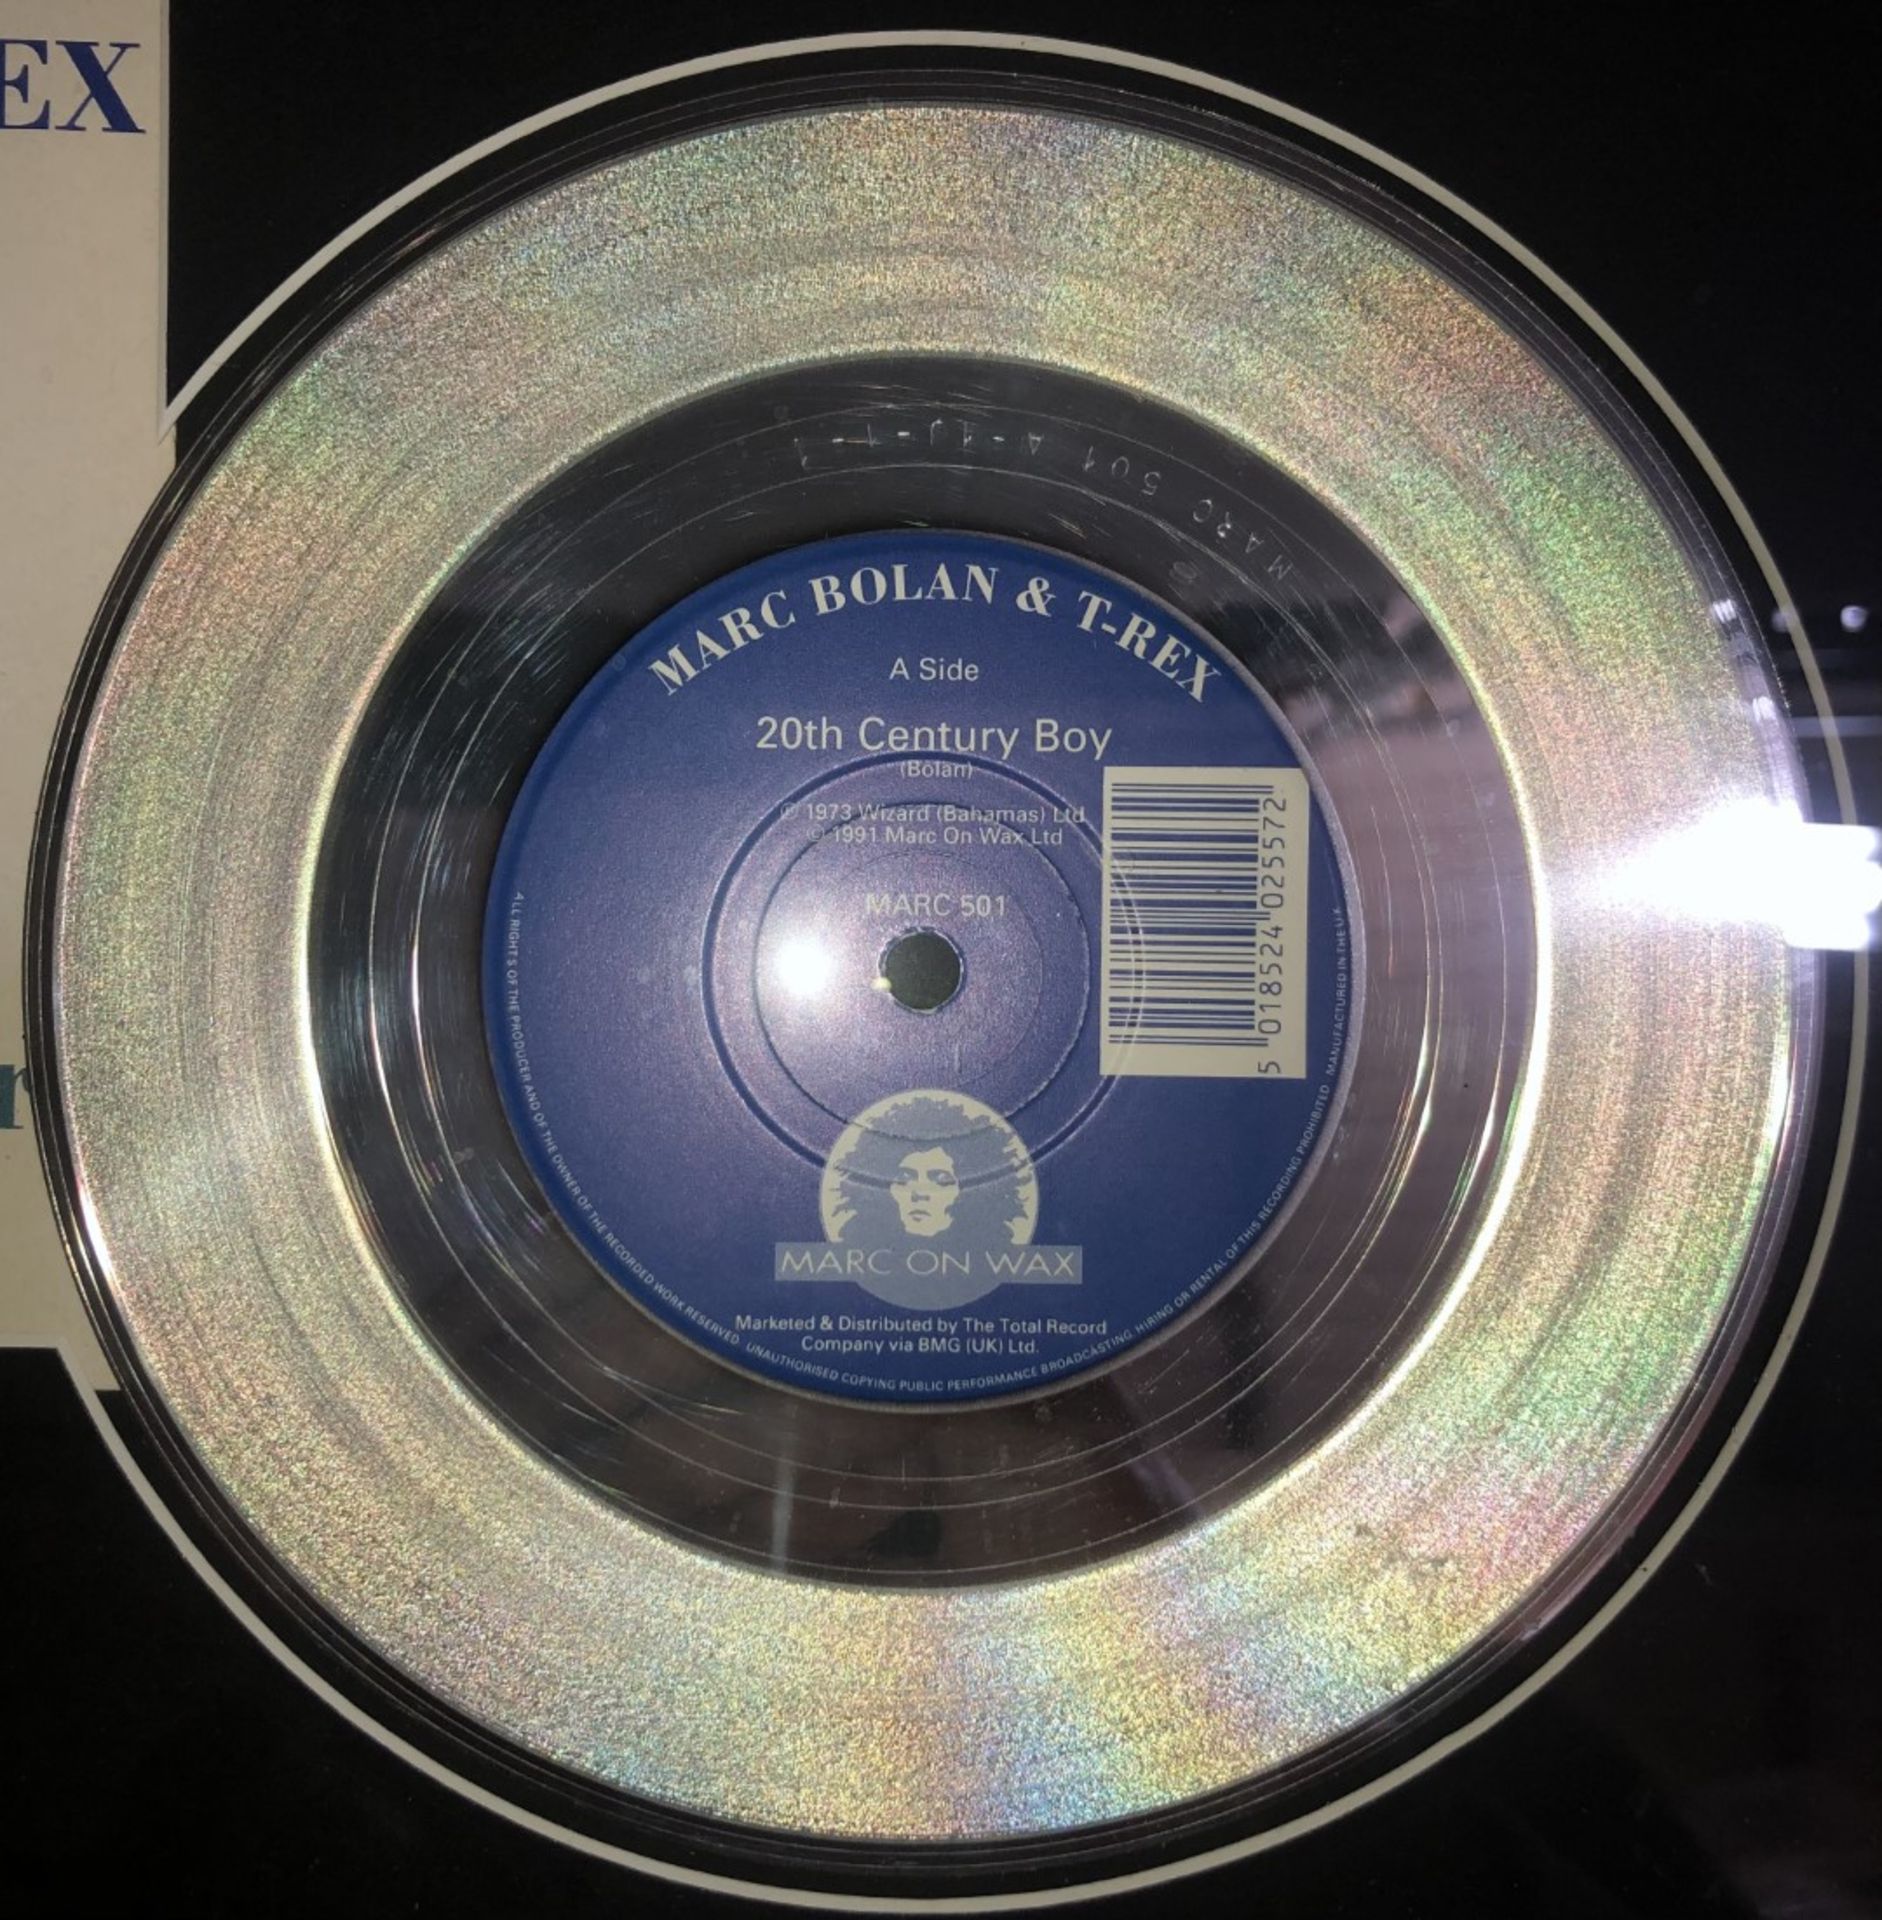 1 x Framed MARC BOLAN & T-REX Silver 7 Inch Vinyl Record - 20th CENTURY BOY - Image 4 of 4